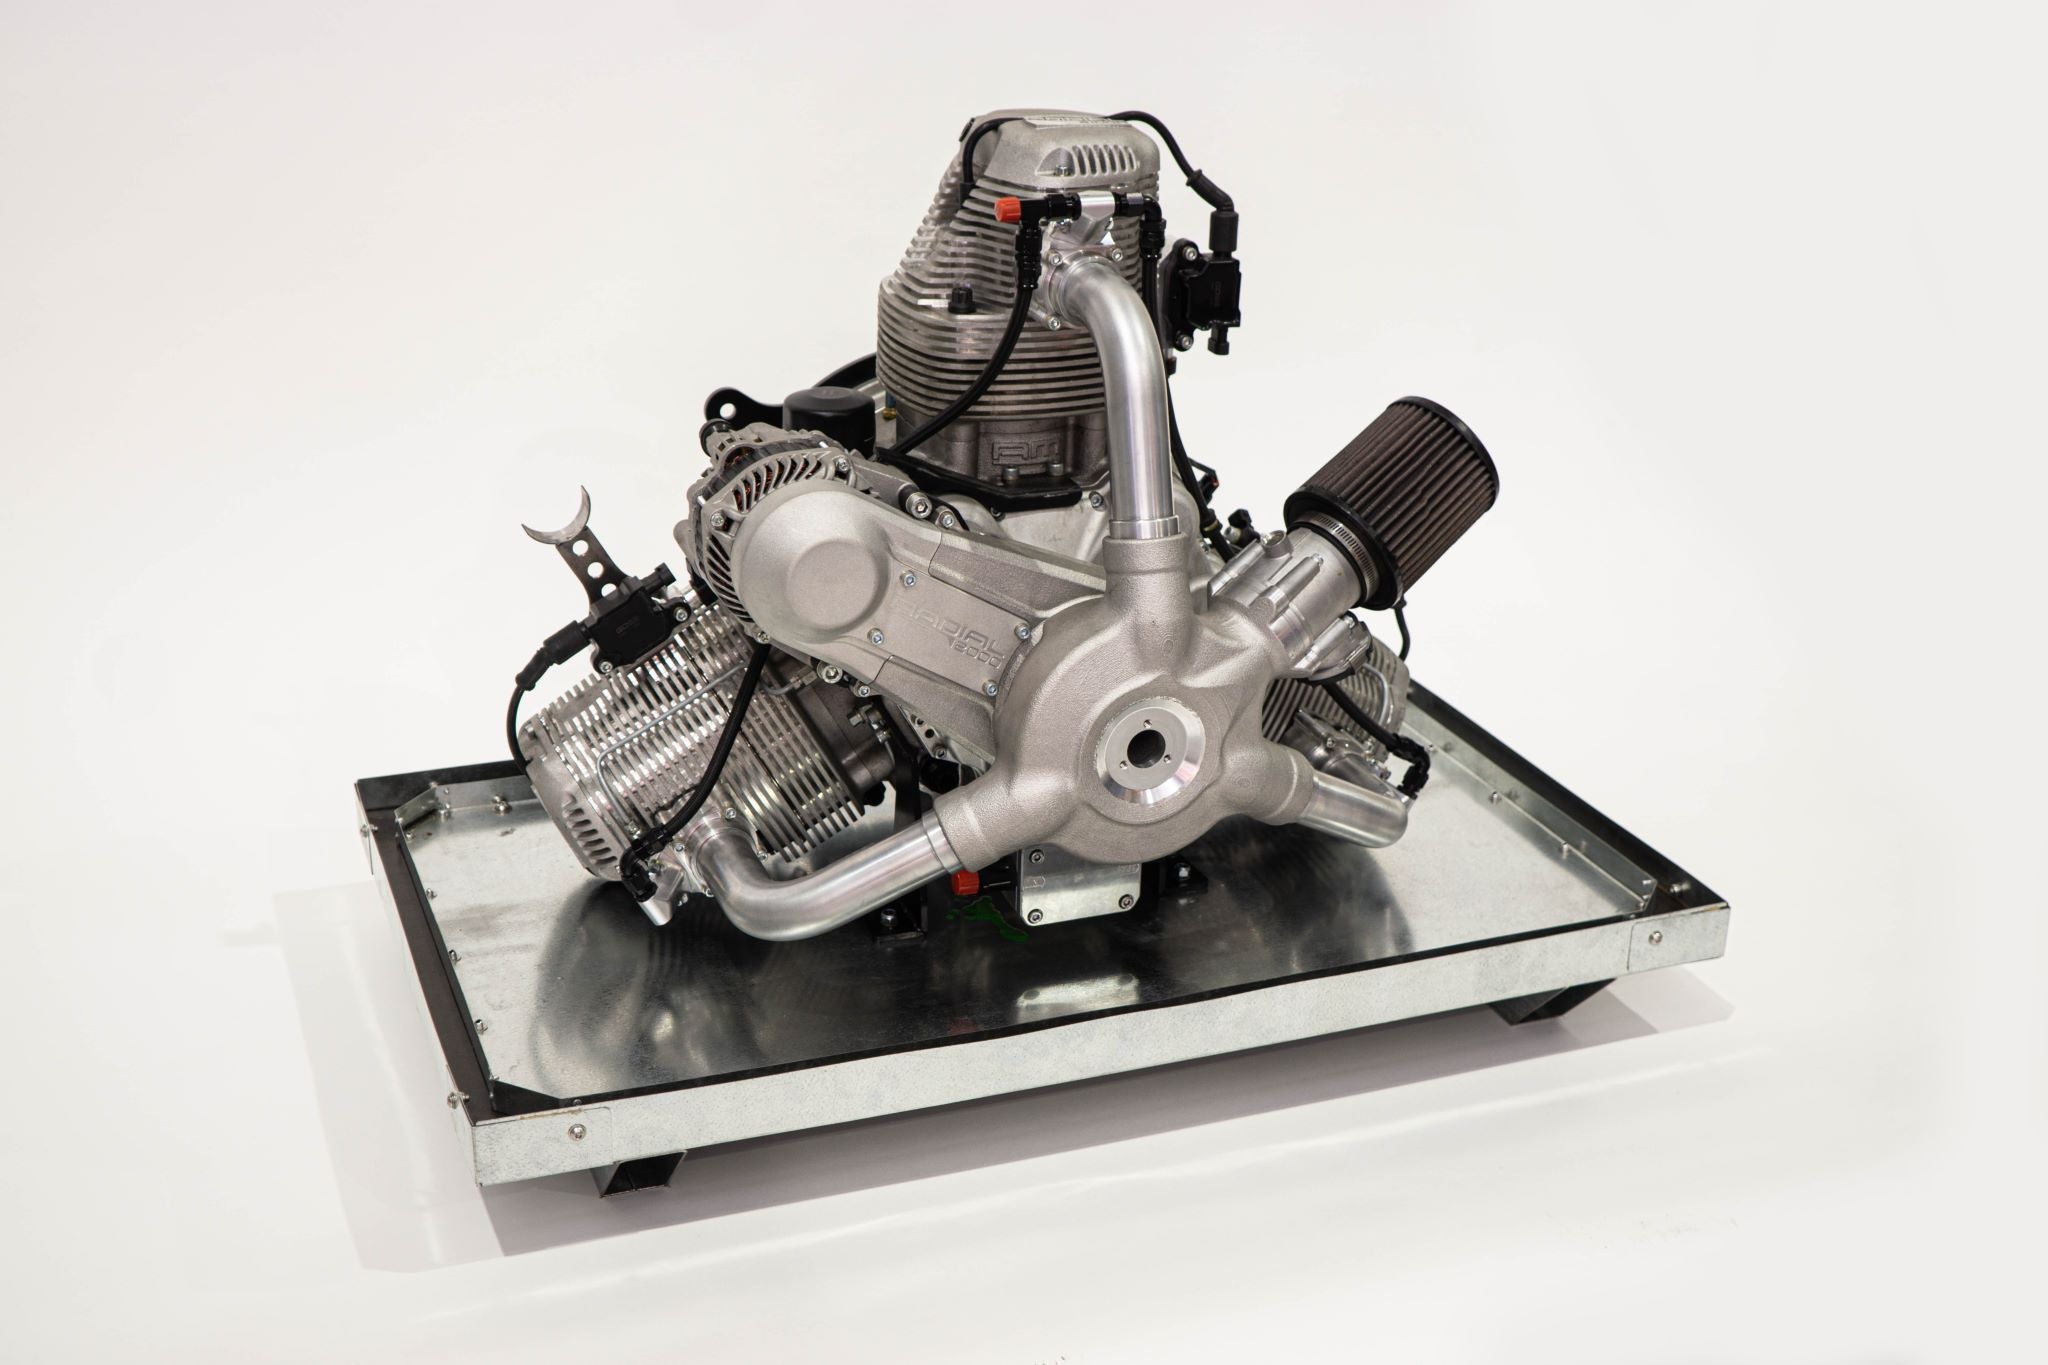 3-Cylinder Radial Motion Engine Kit